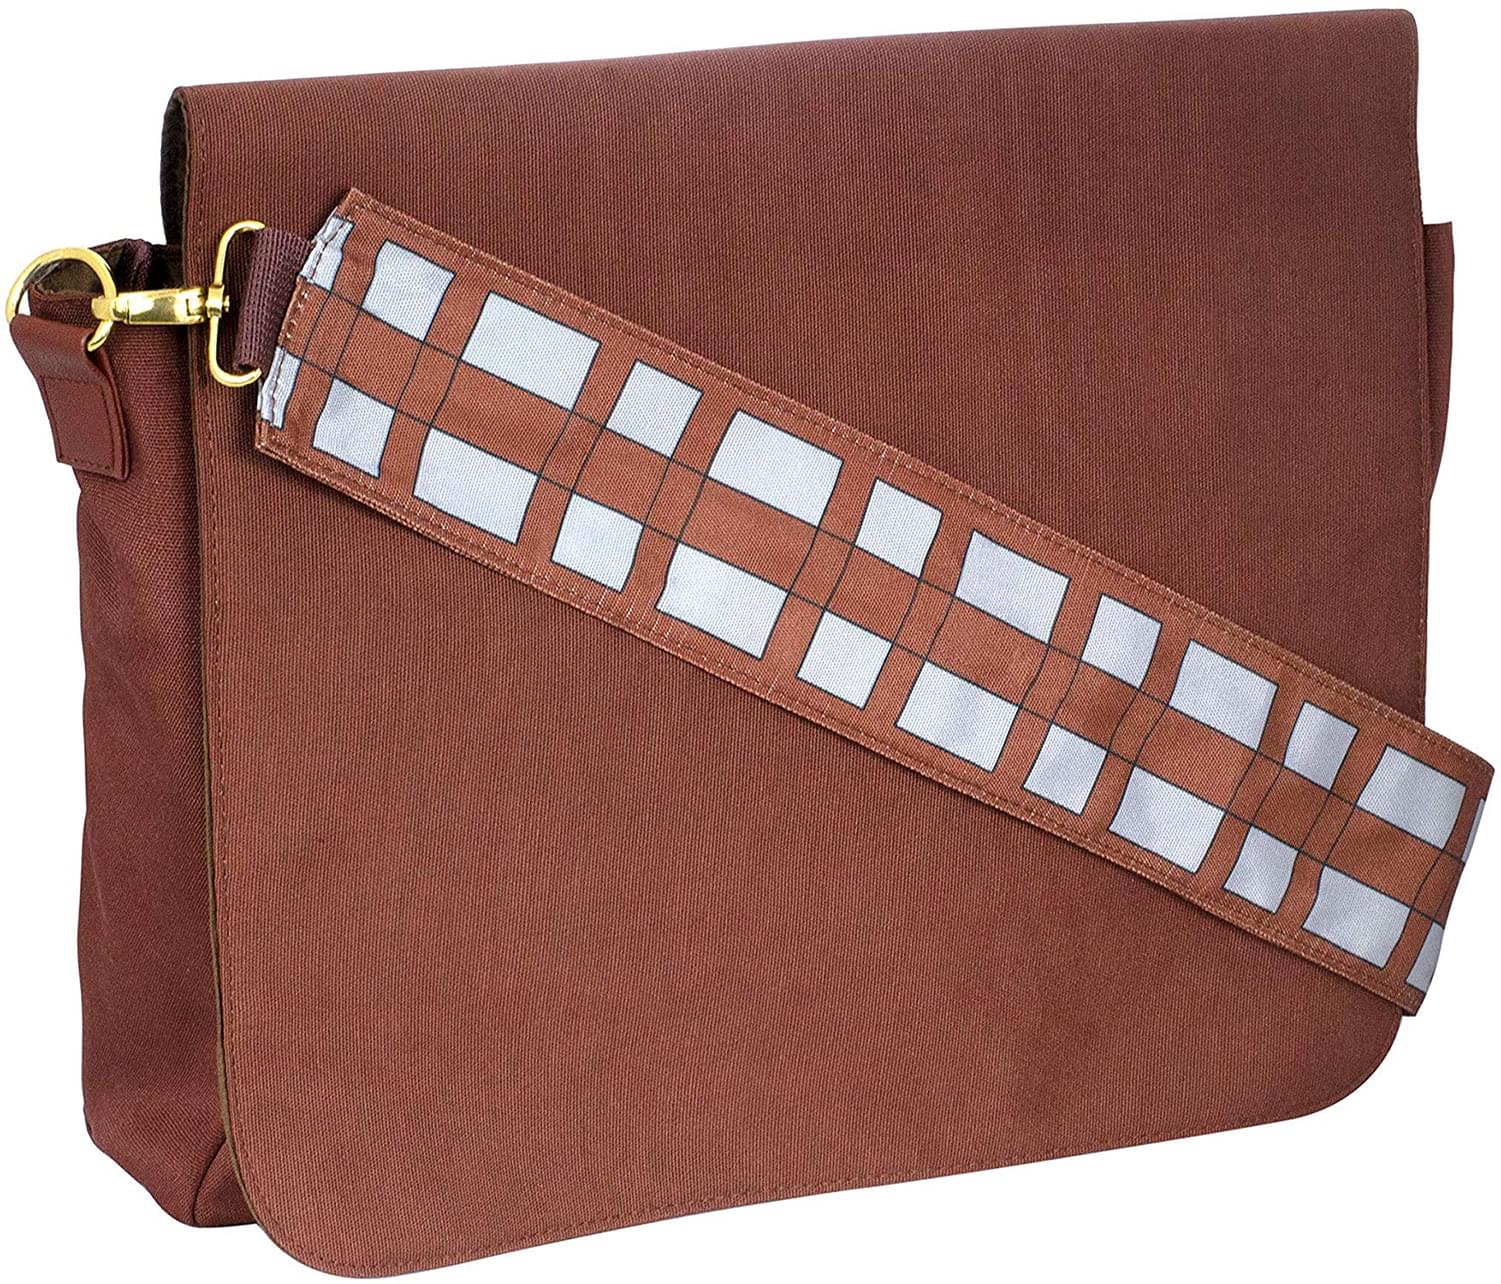 Star Wars Chewbacca 10 x 14 Inch Messenger Bag